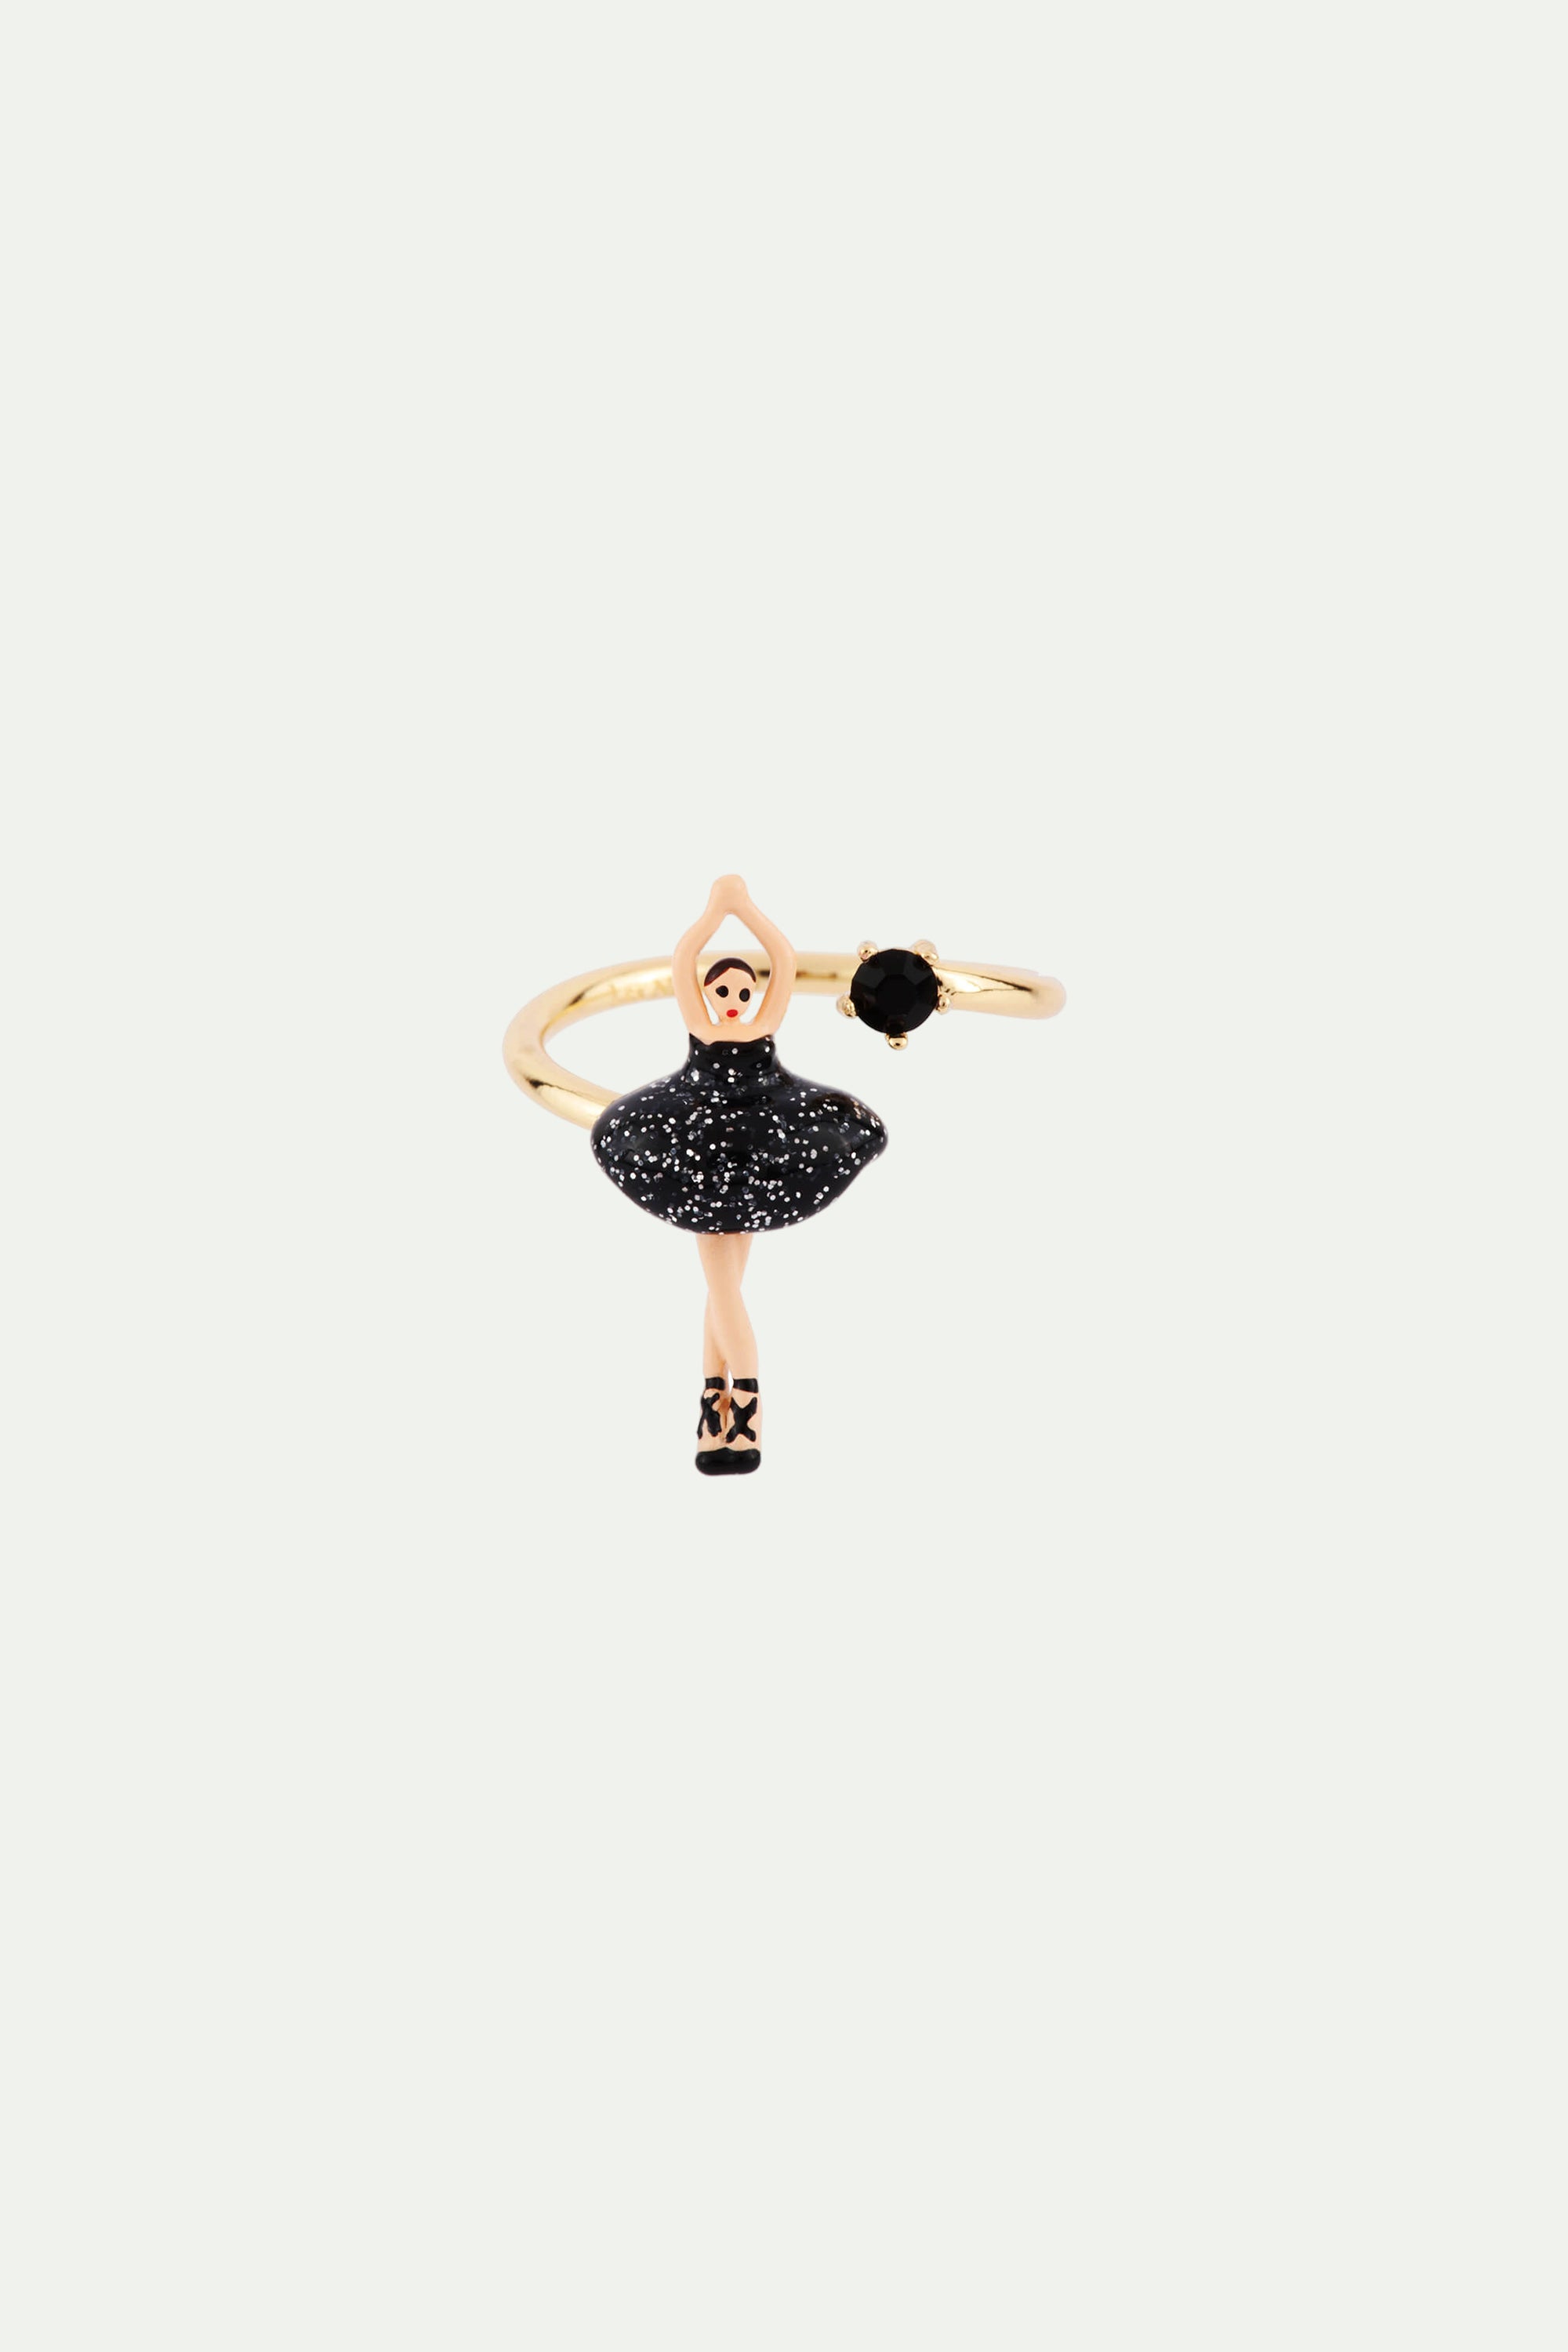 Adjustable ring with mini ballerina in a black tutu